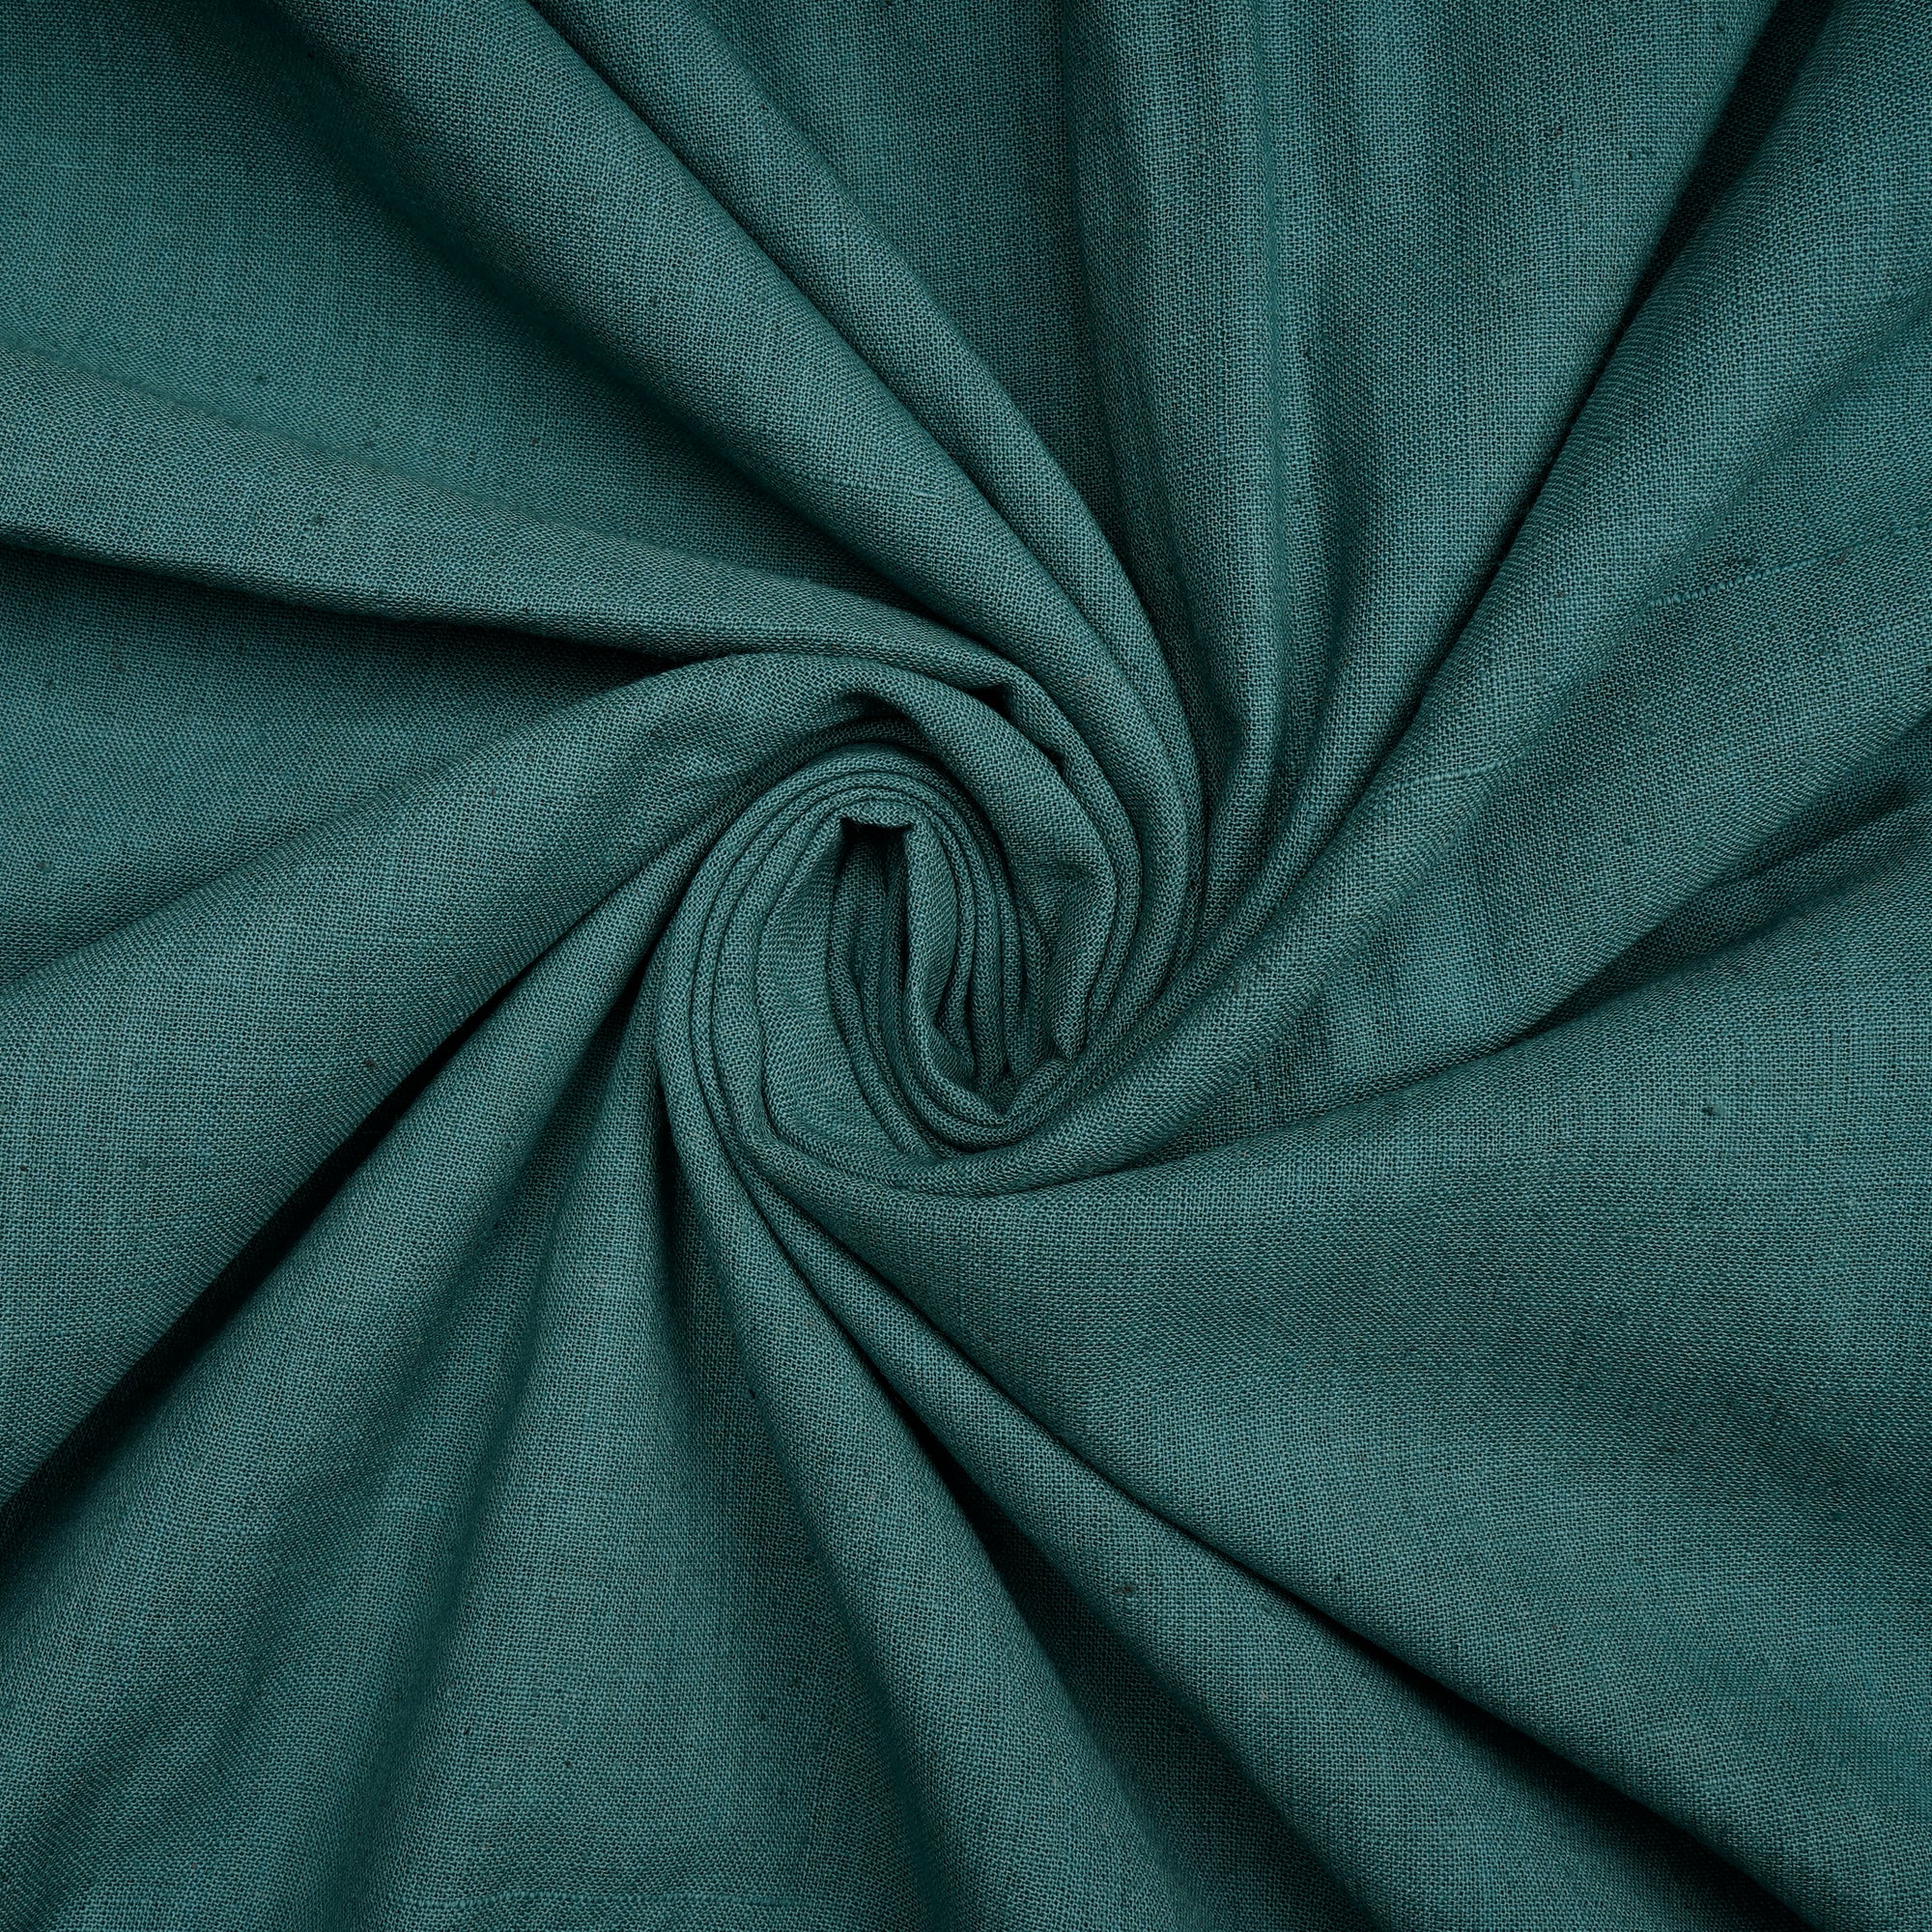 SageBrush Green 40's Count Piece Dyed Handspun Handwoven Cotton Fabric